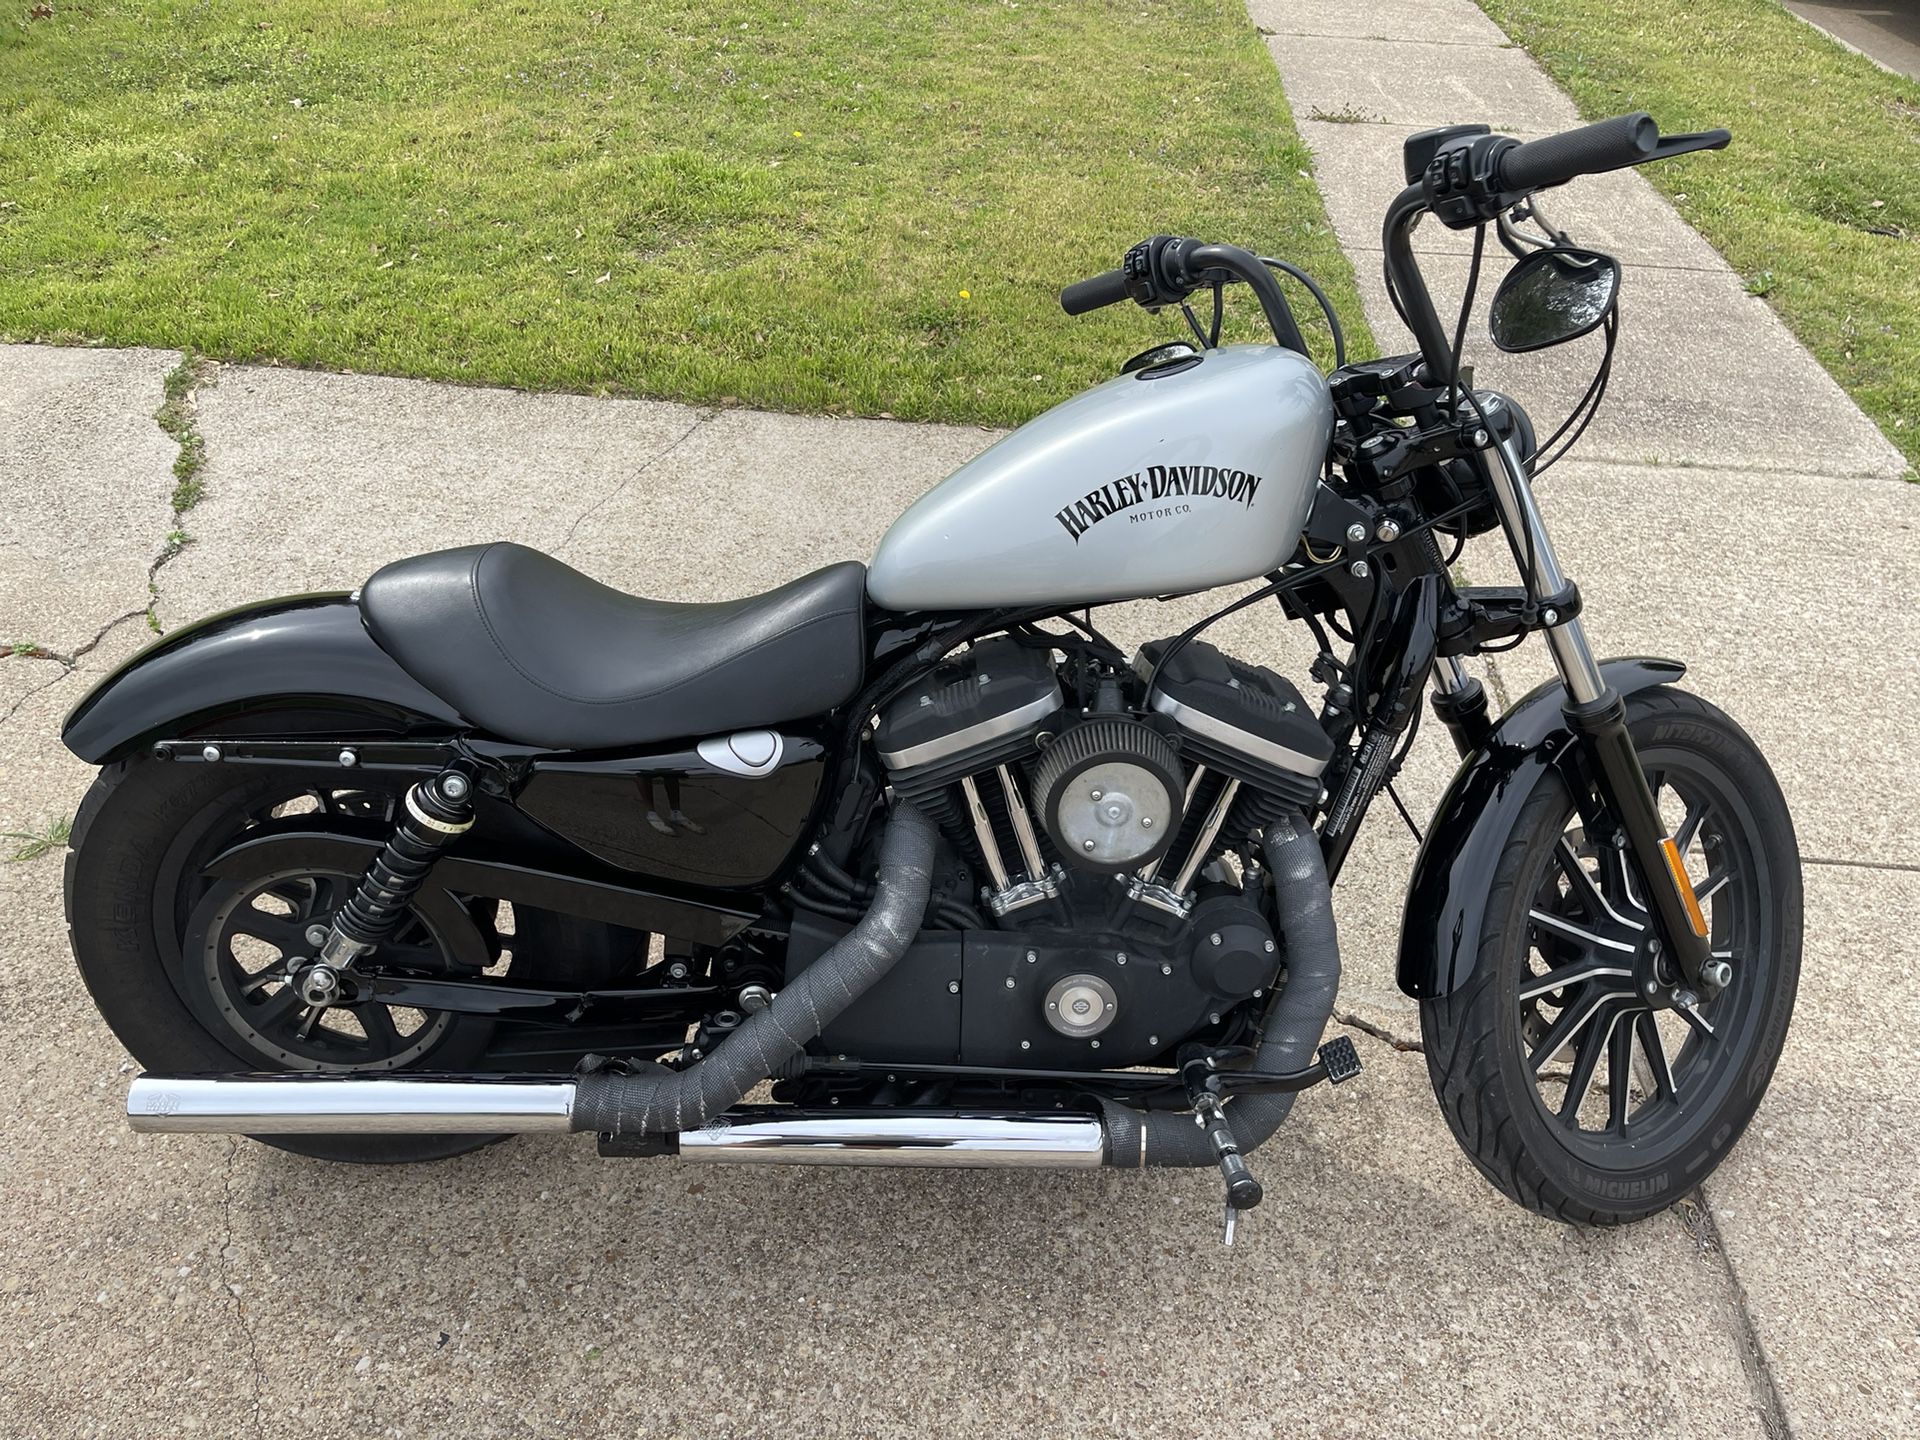 2015 Harley Davidson Iron 883